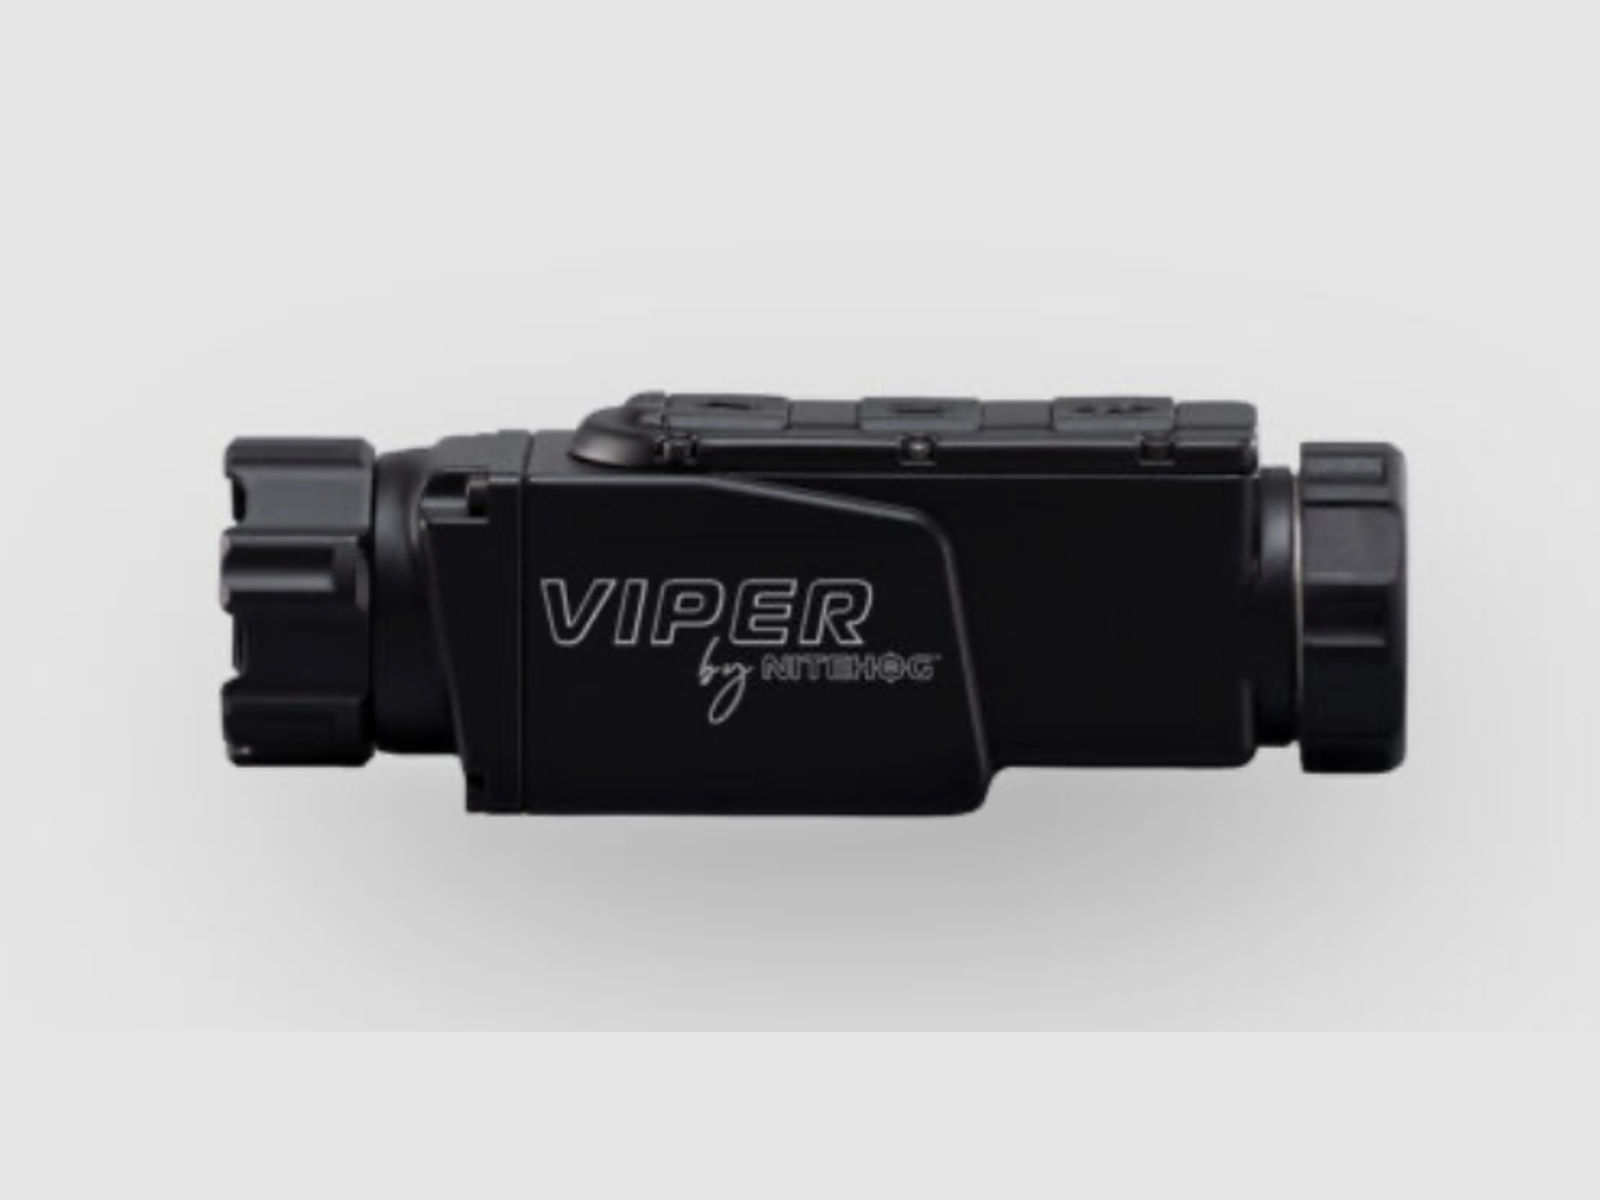 Nitehog Wärmebildgerät TIR M35 XC Viper